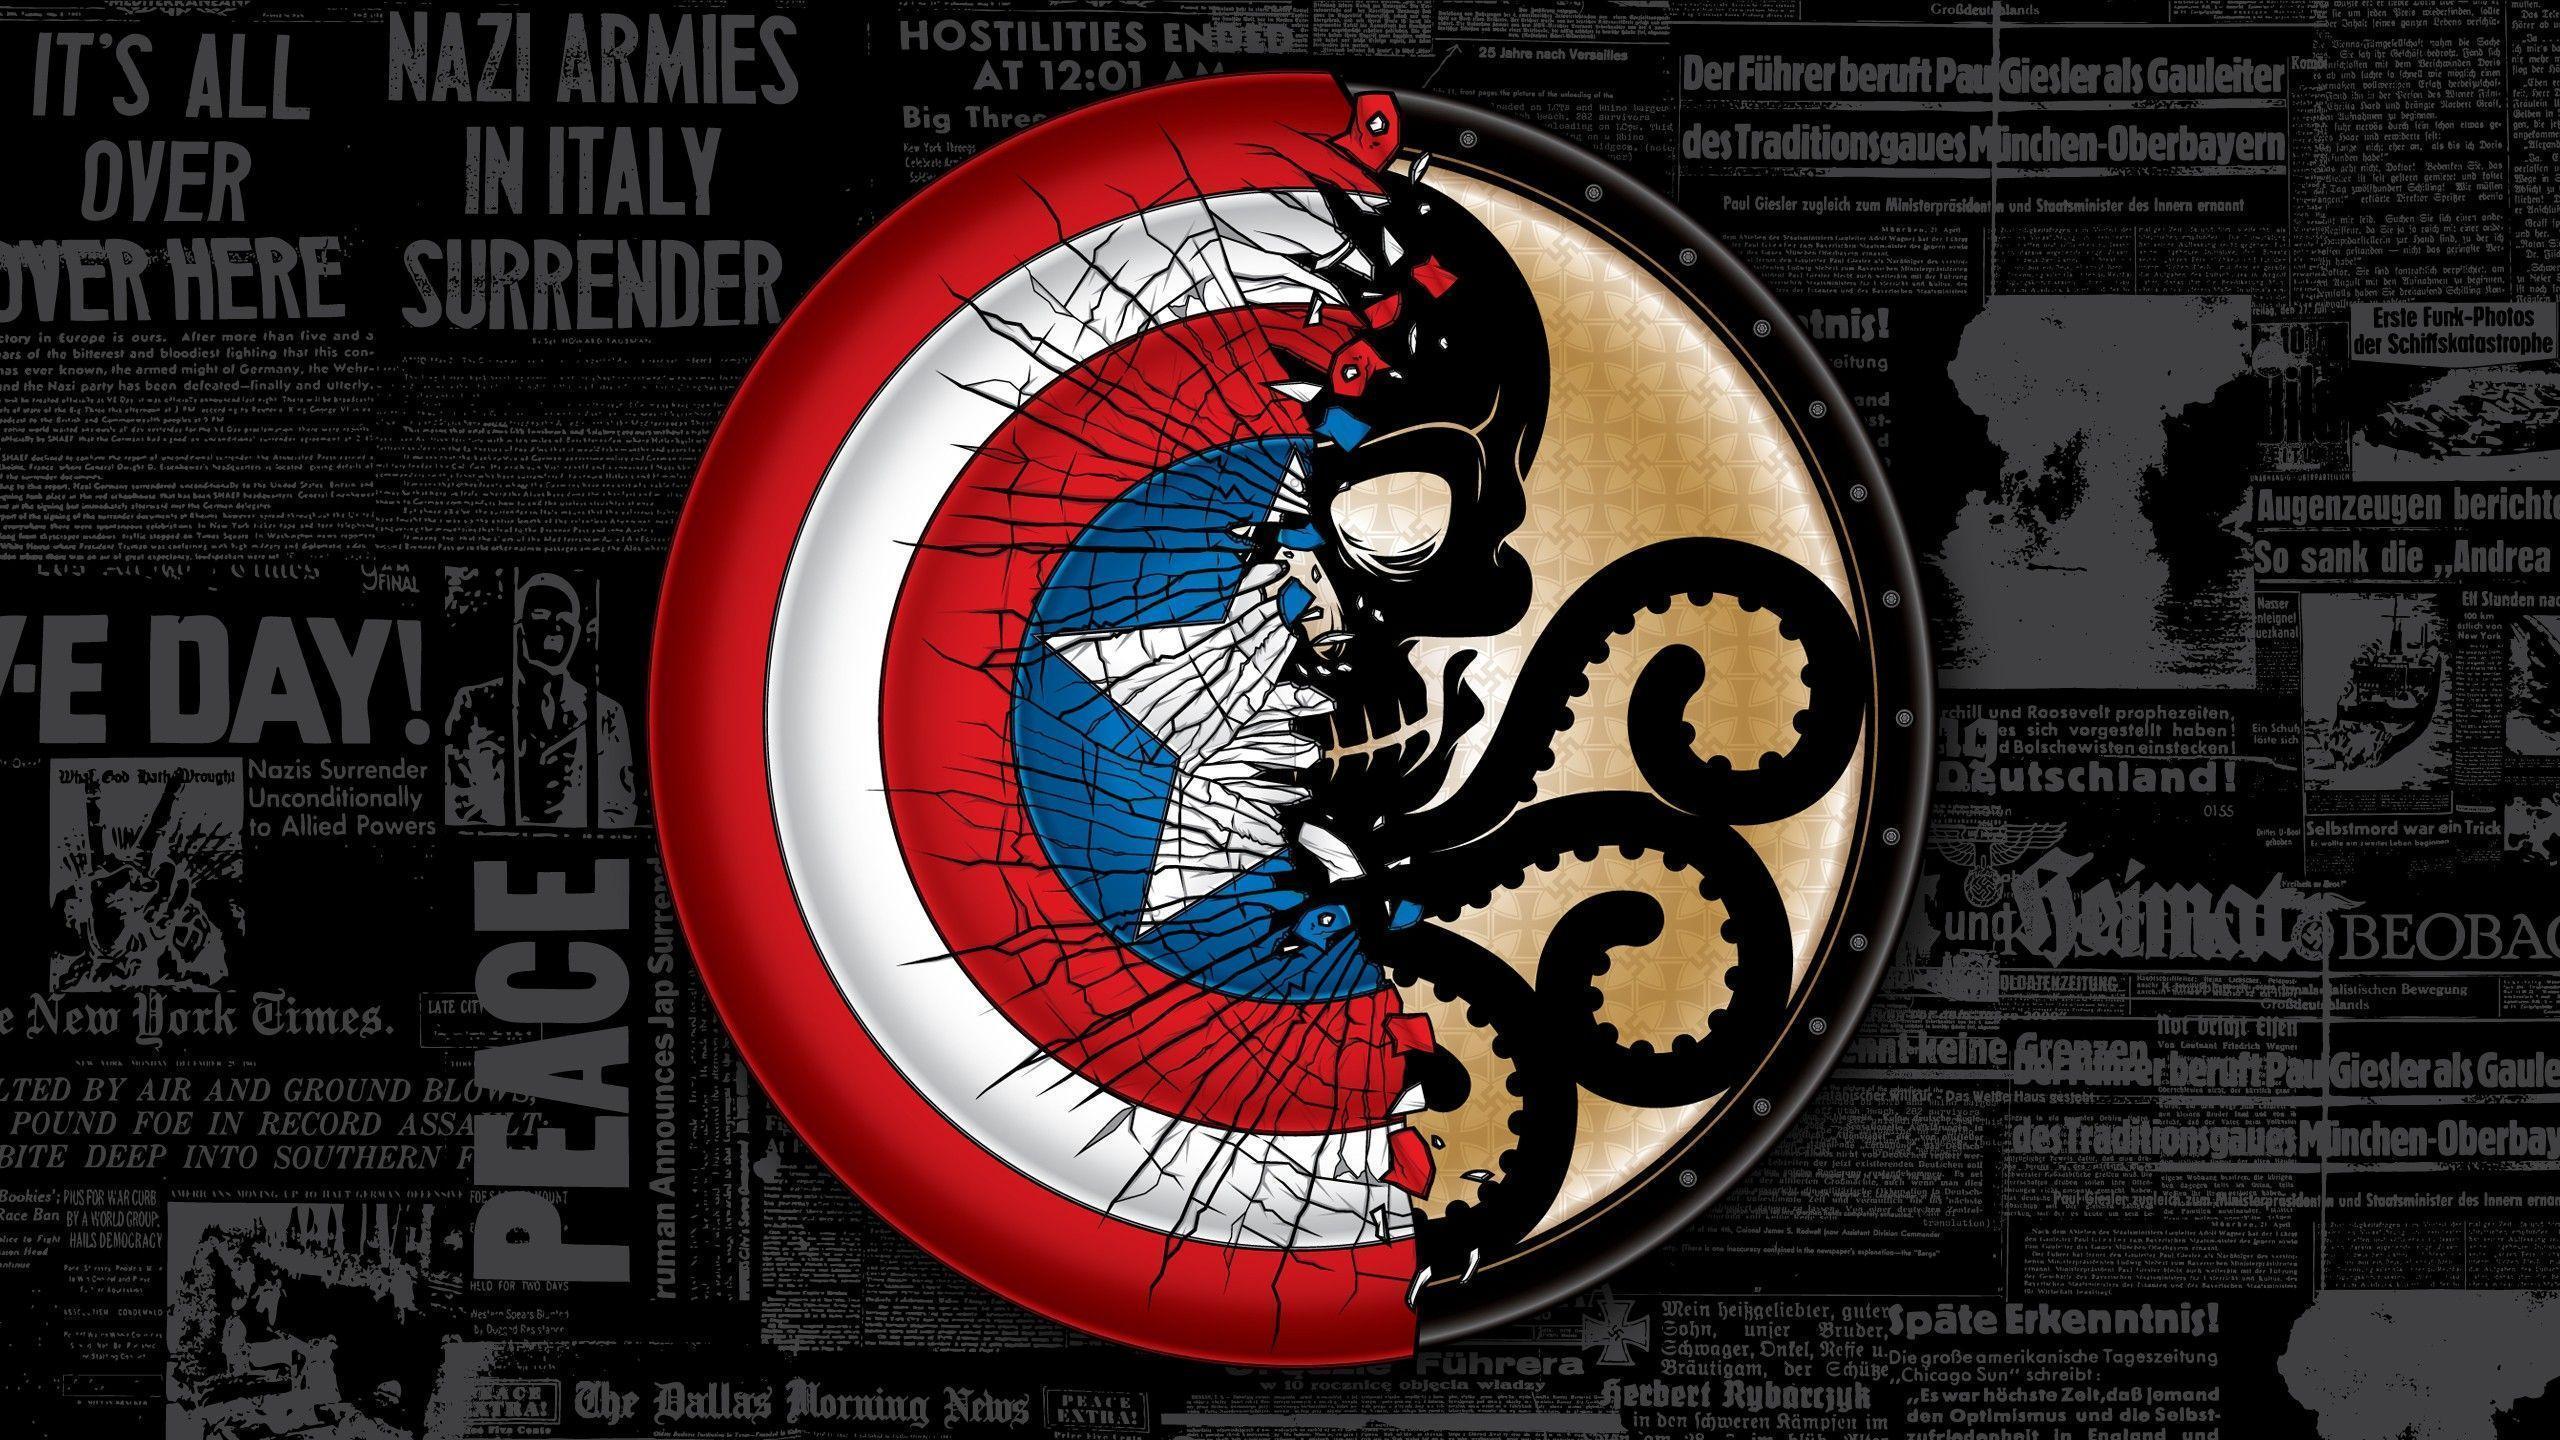 Captain America Logo Wallpaper